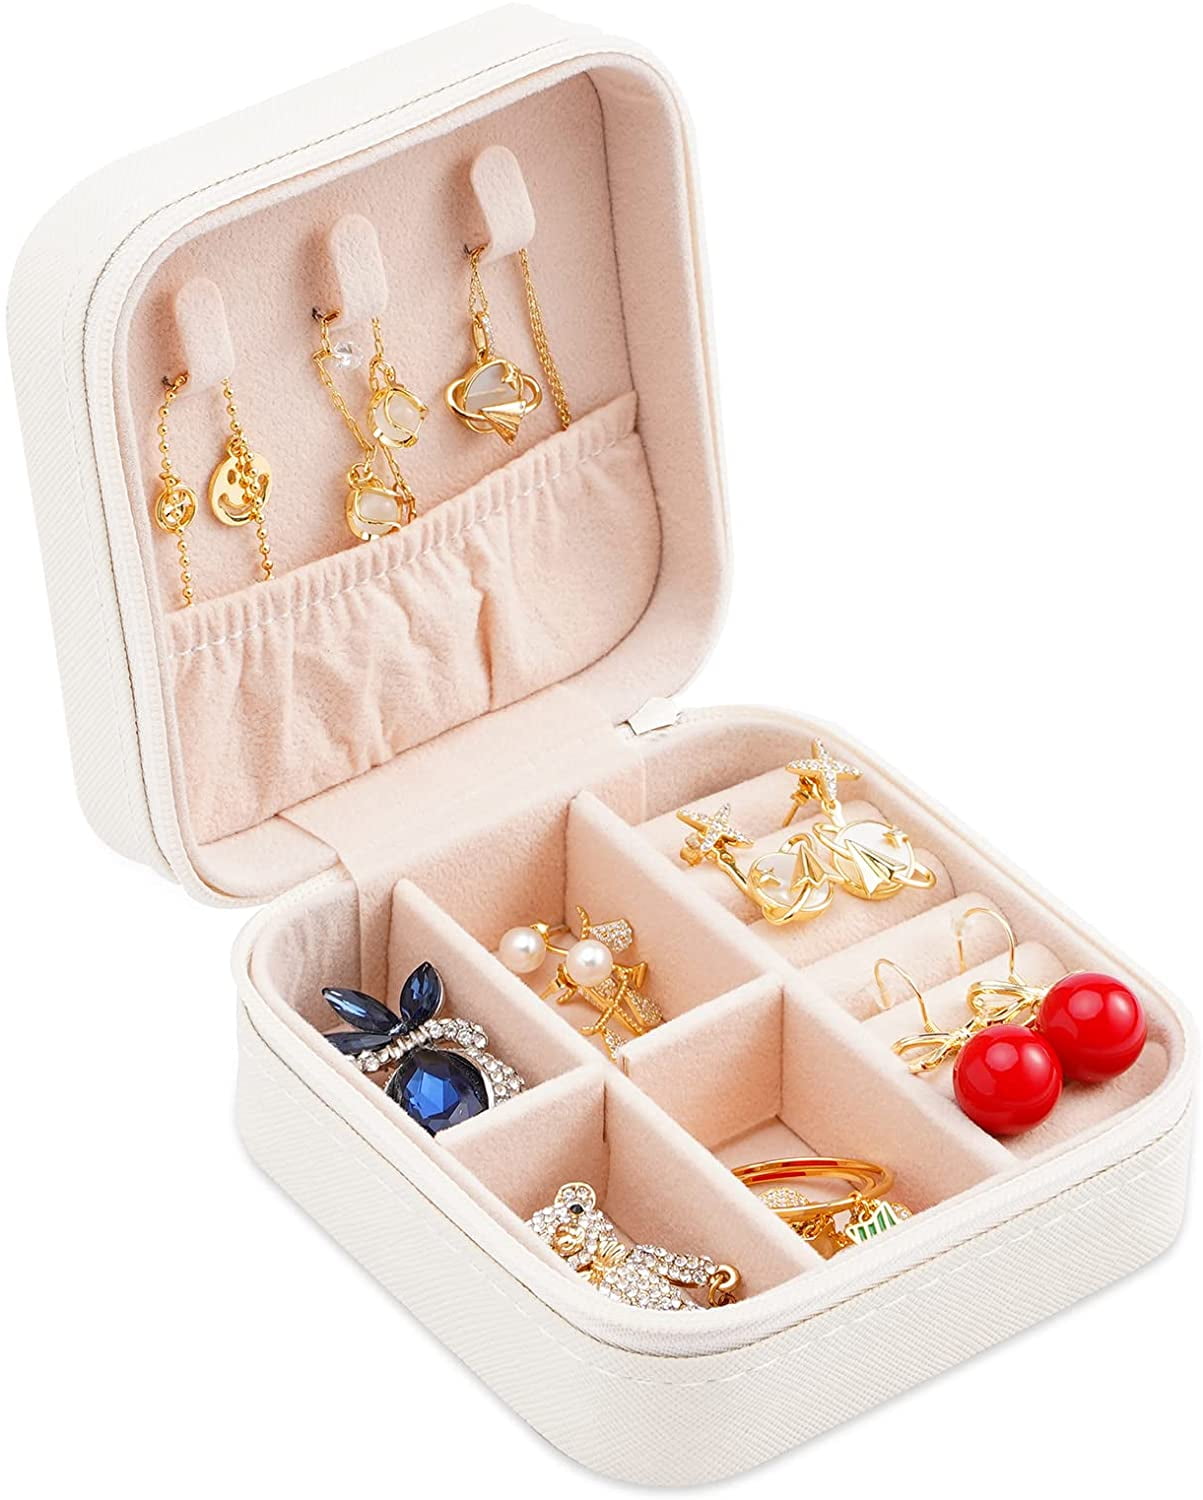 KCY Jewelry Box for Women Girls,Small Travel Organizer Case,PU